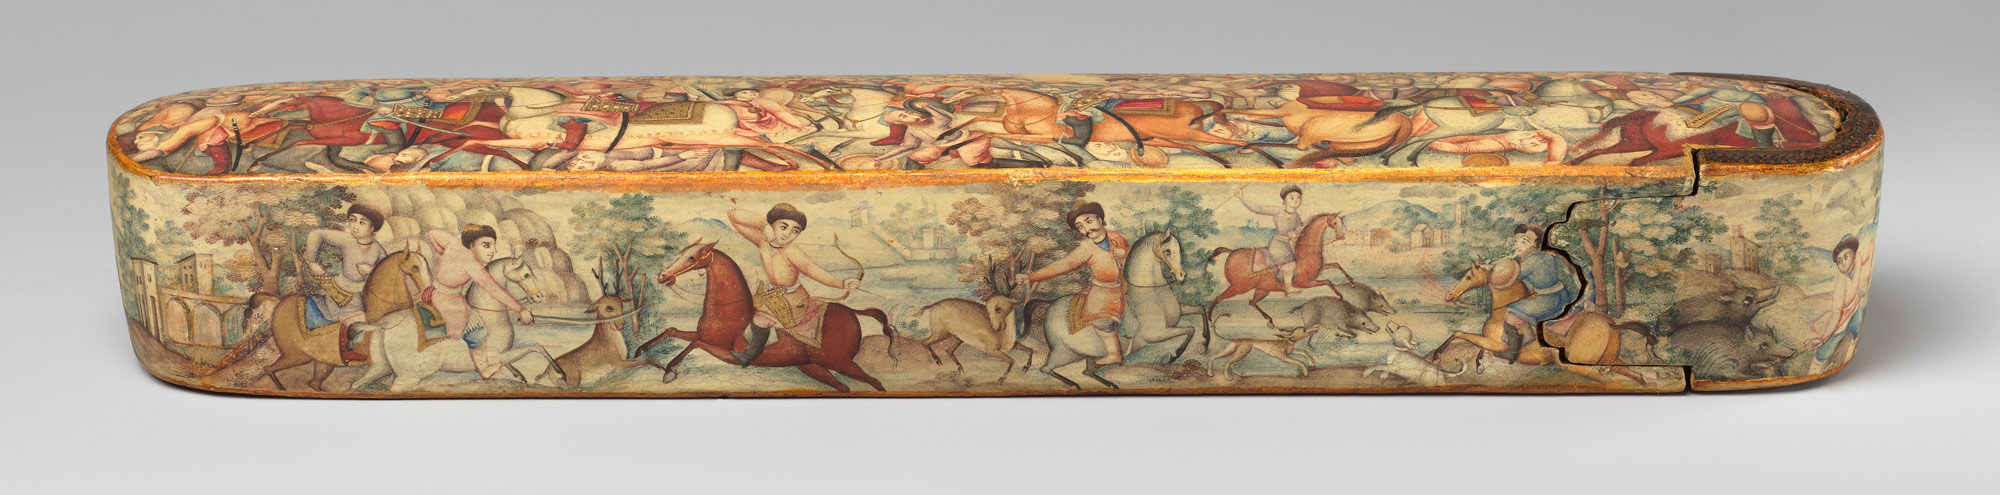 Pen Box (Qalamdan) Depicting Shah Ismail in a Battle against the Uzbeks